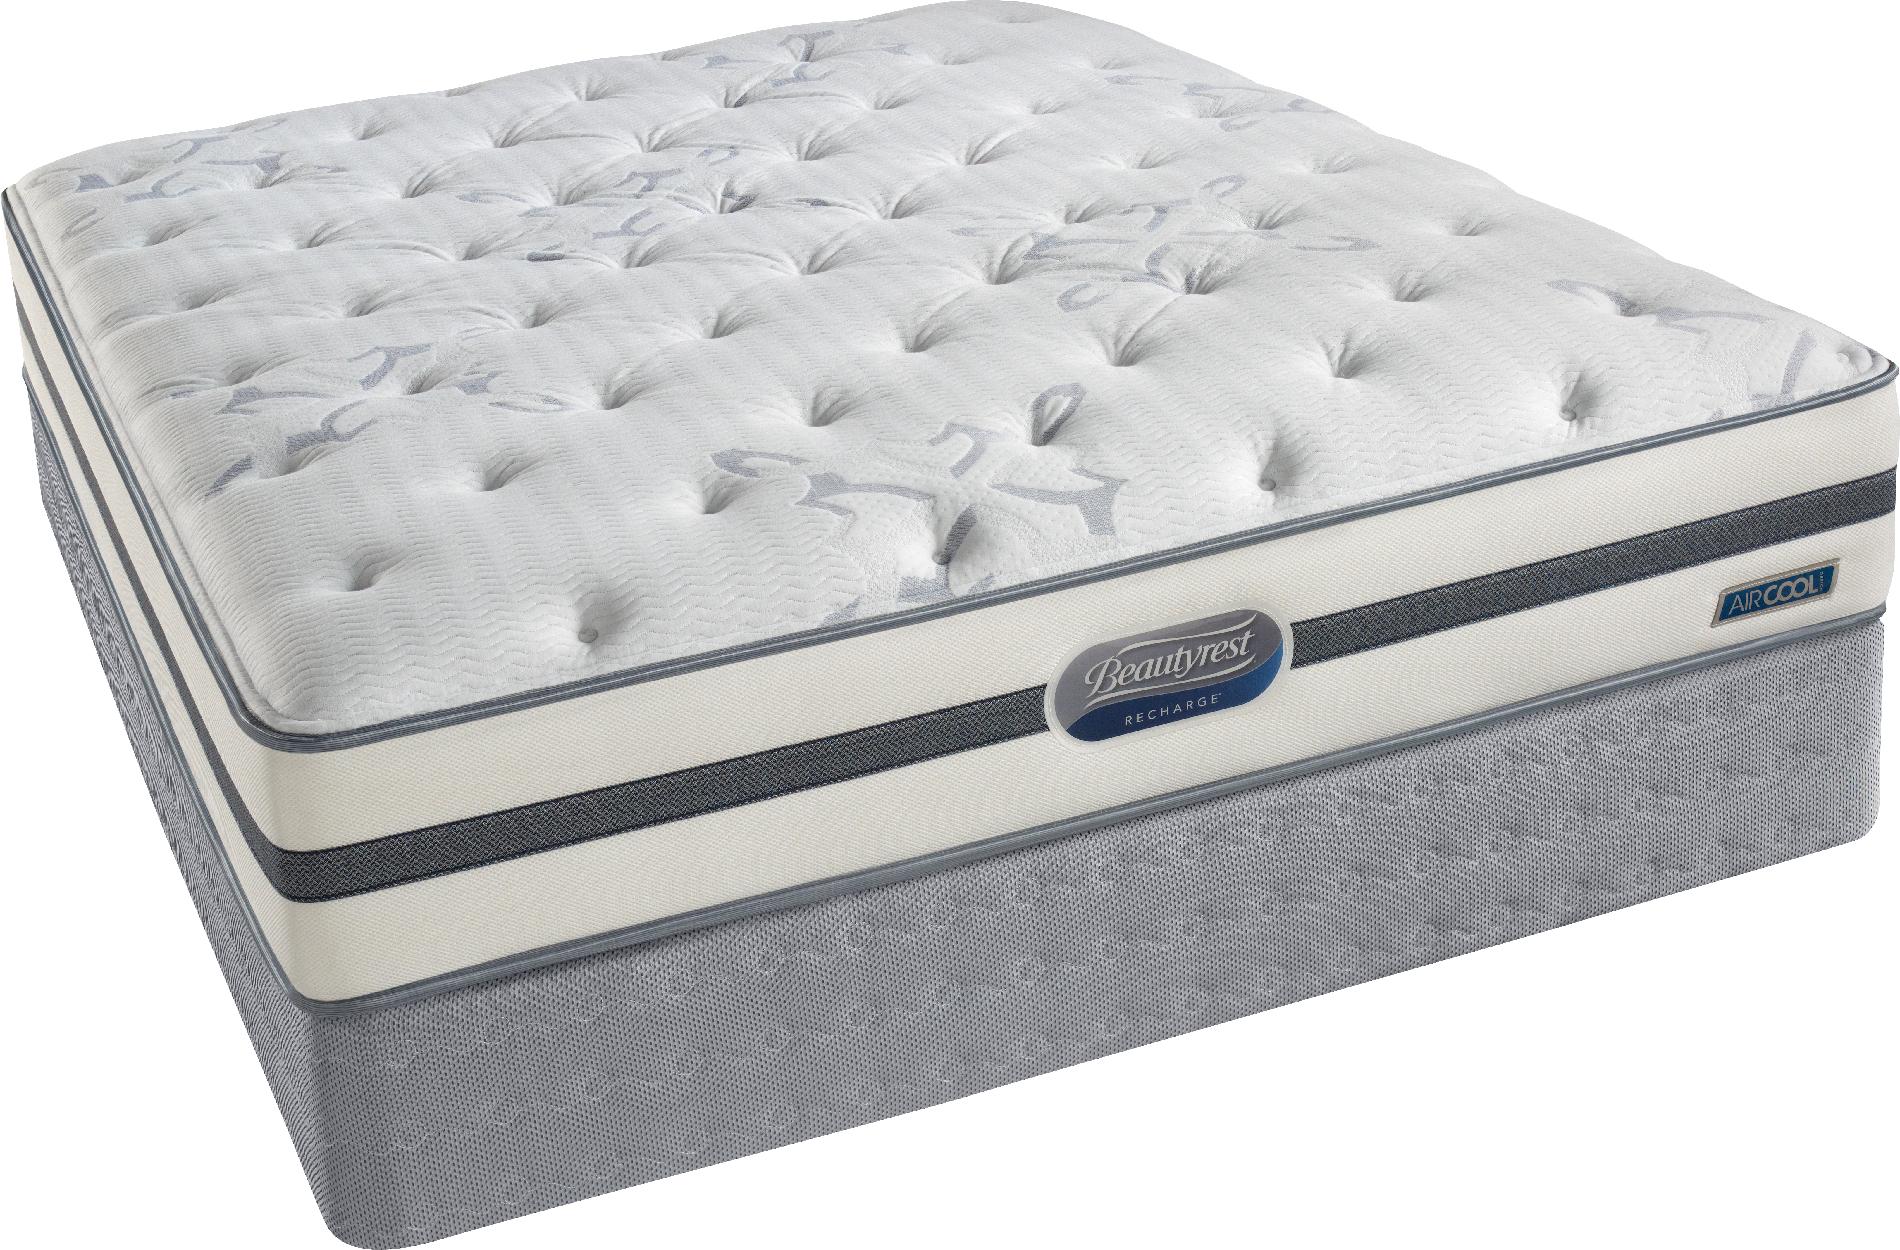 sears brand mattress reviews